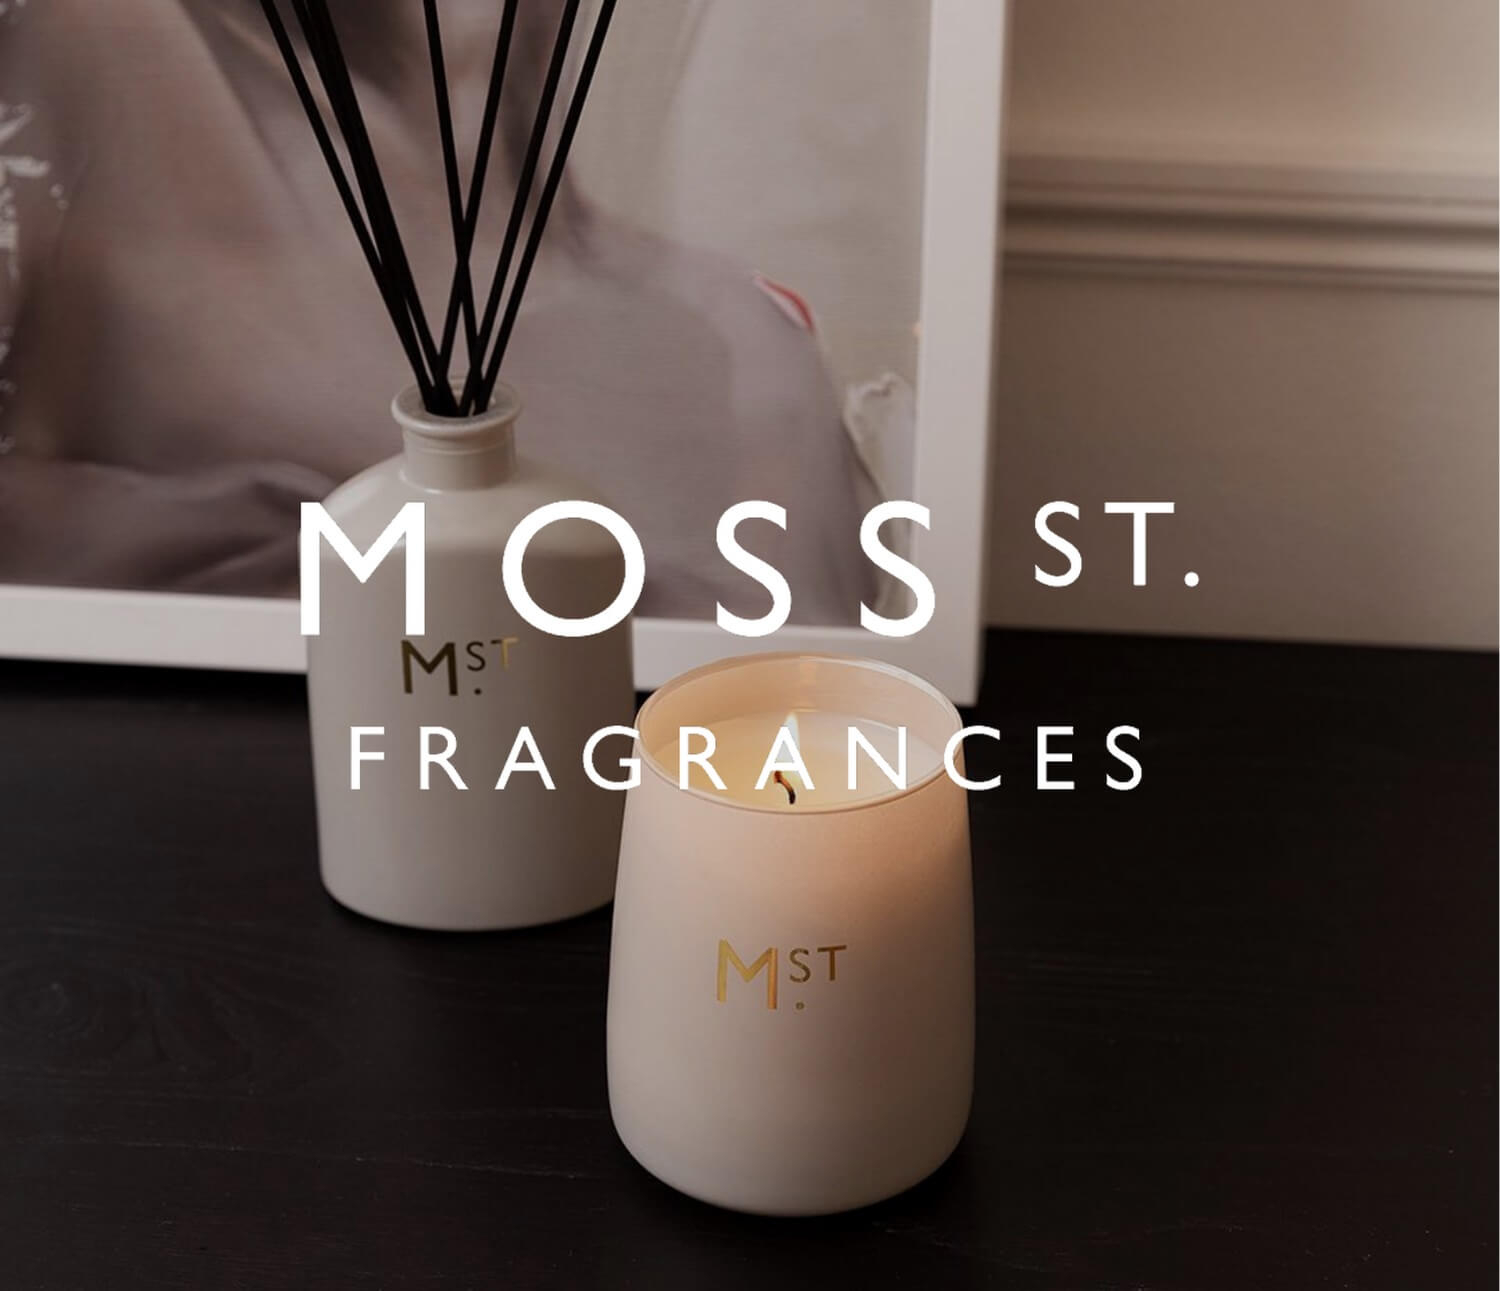 Moss St. Fragrances